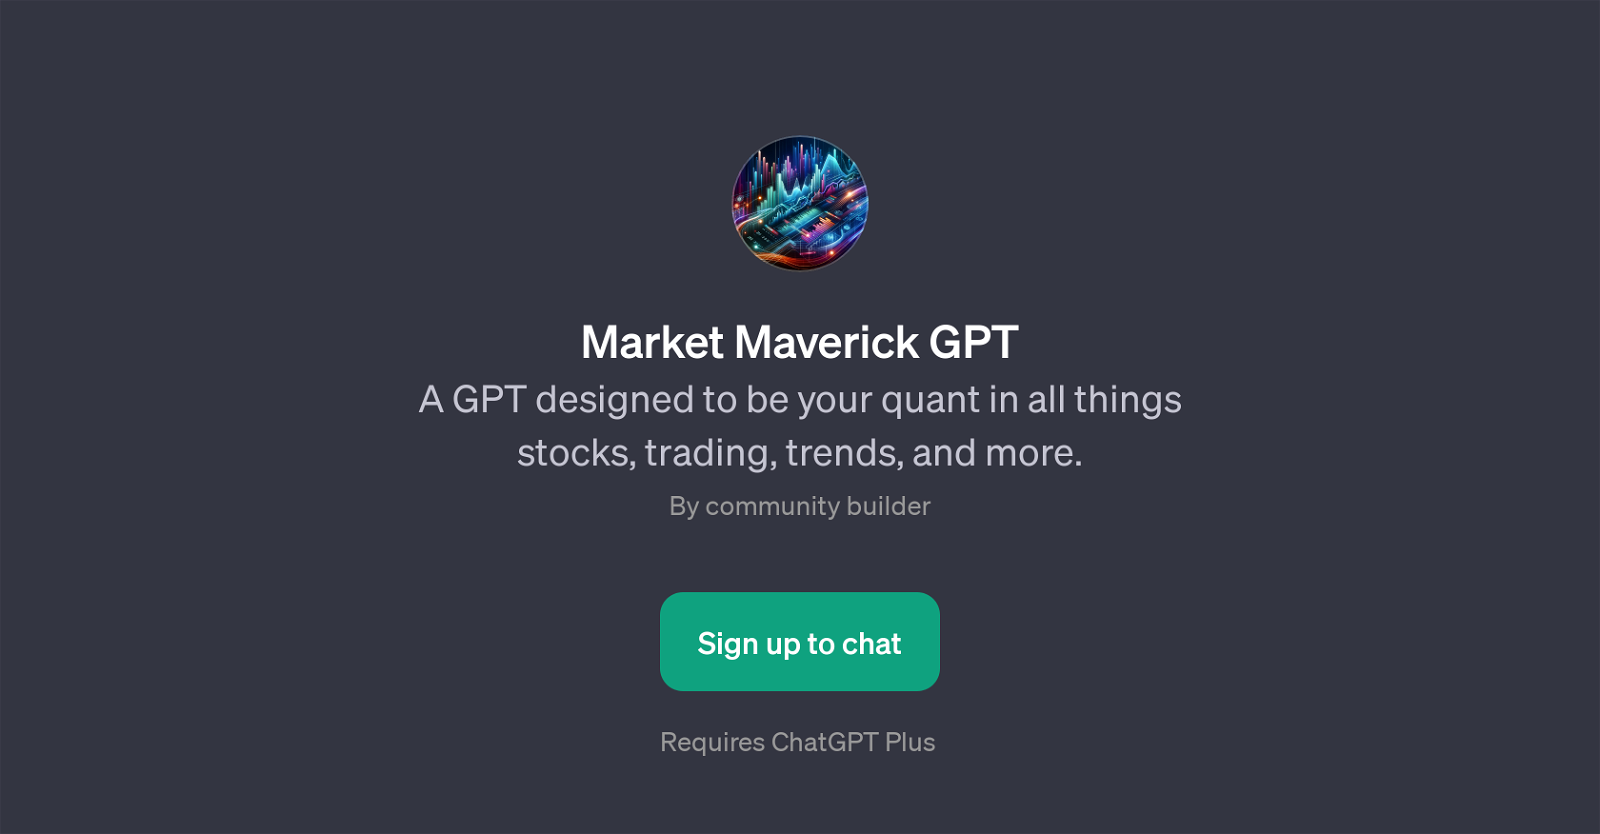 Market Maverick GPT website